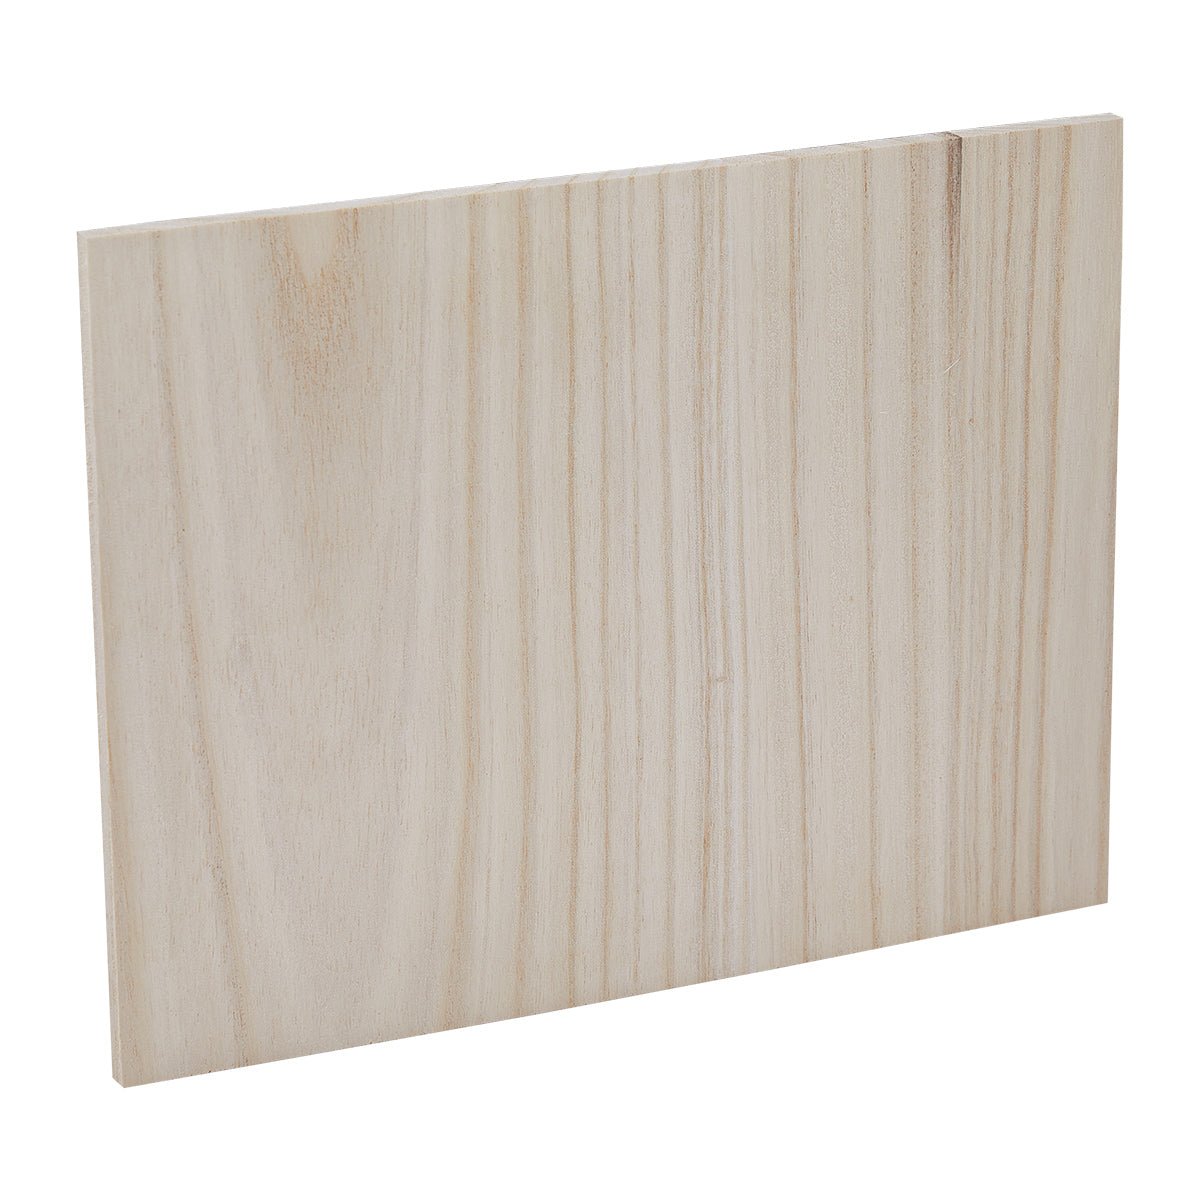 Solid Wood Board Paulownia Splice Board 4mm-40mm Thick Paulownia Rigid Thin  Board Taekwondo Board Solid Wood Strip - China Paulownia Board, Splice  Board